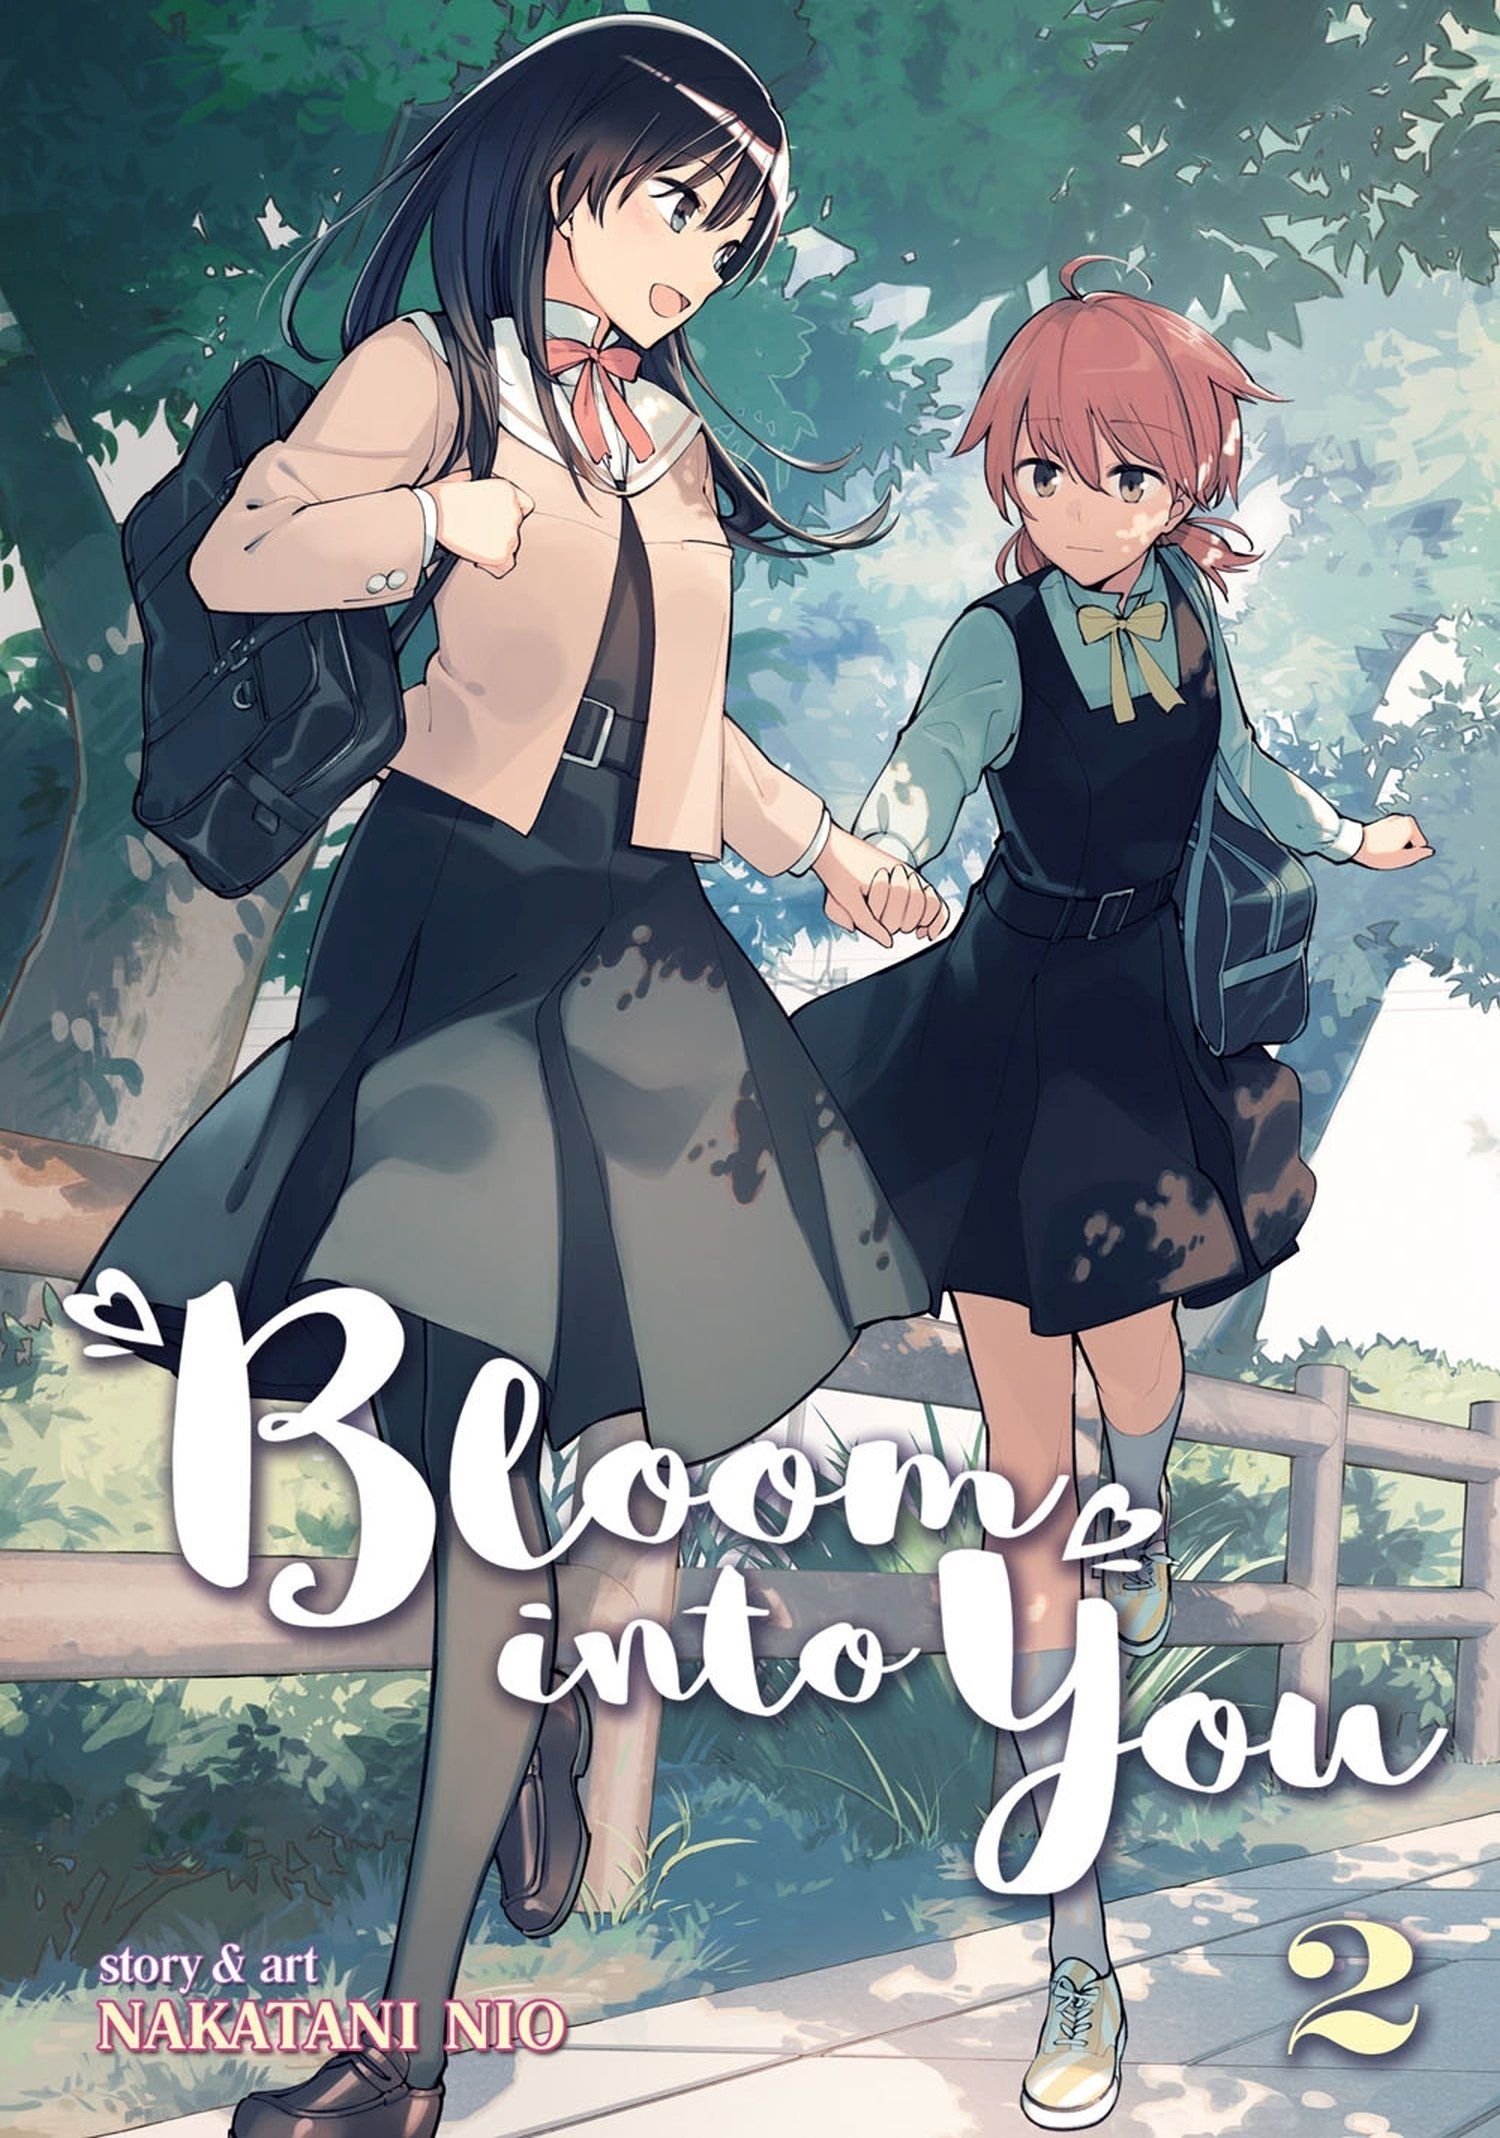 Bloom into You Vol. 2: Amazon.ca: Nio, Nakatani: Books